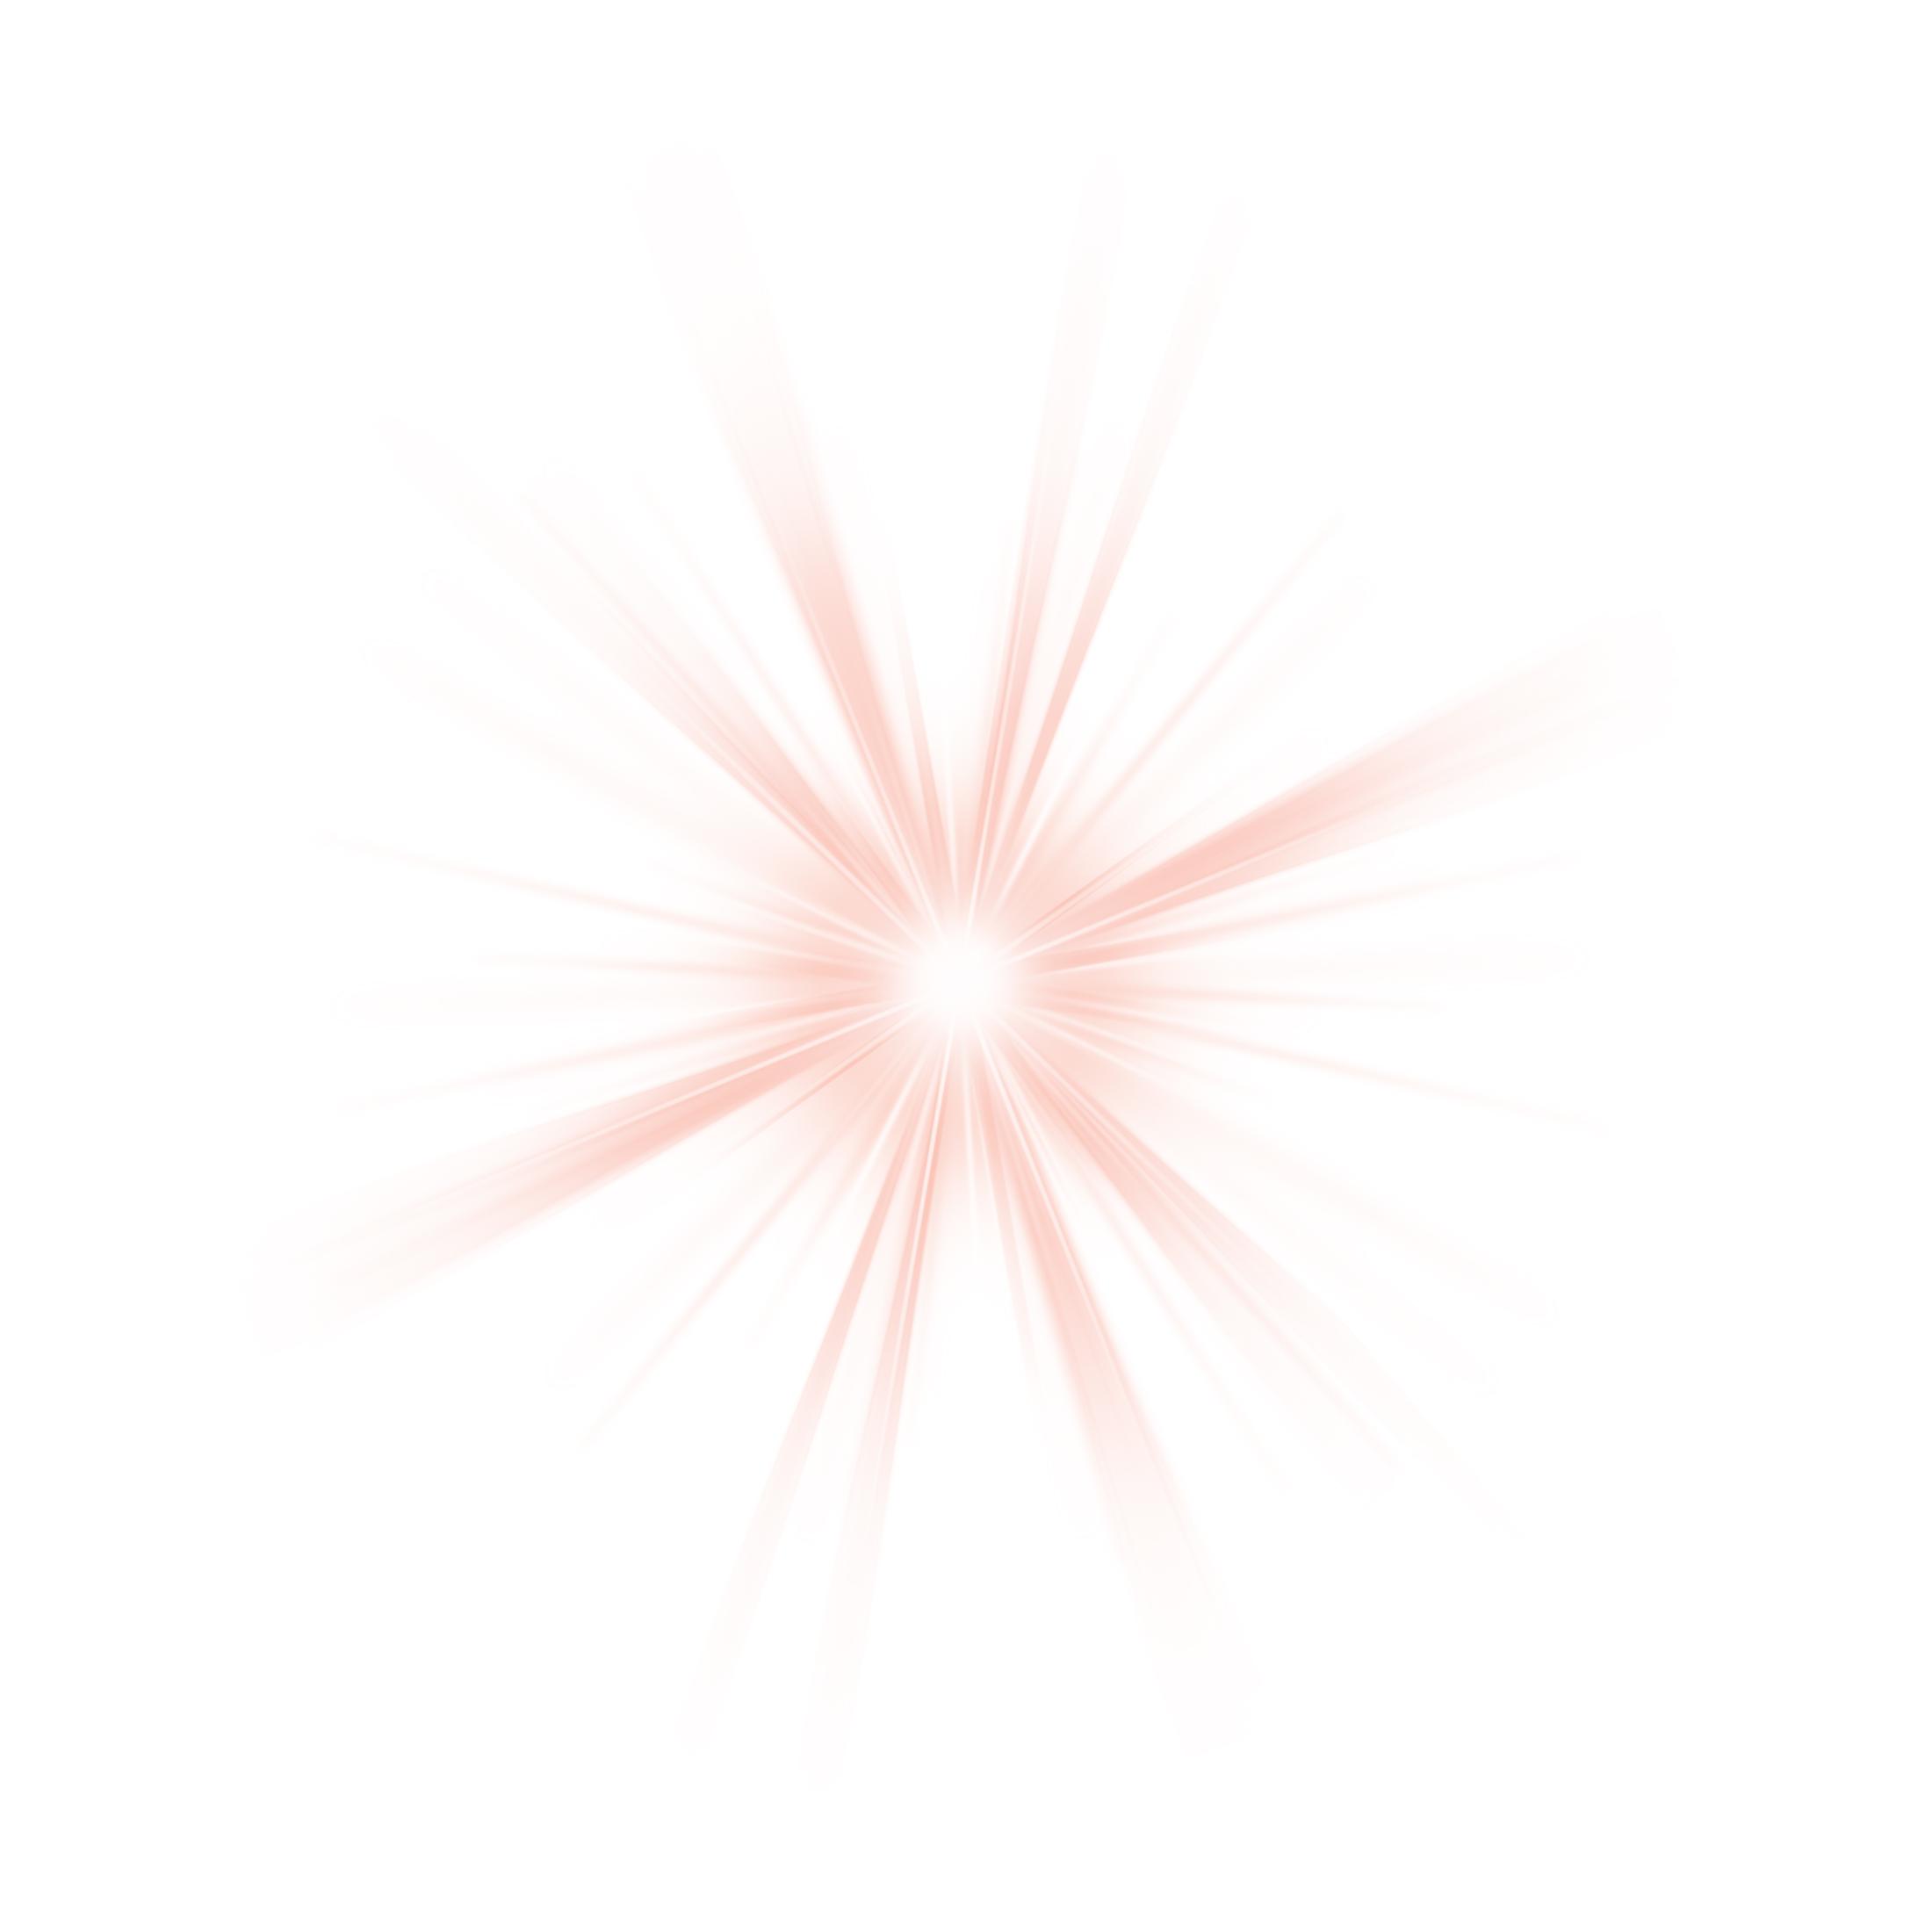 L'Oreal Paris Magic Lumi Light Infusing Primer, 0.68 fl oz - image 3 of 8